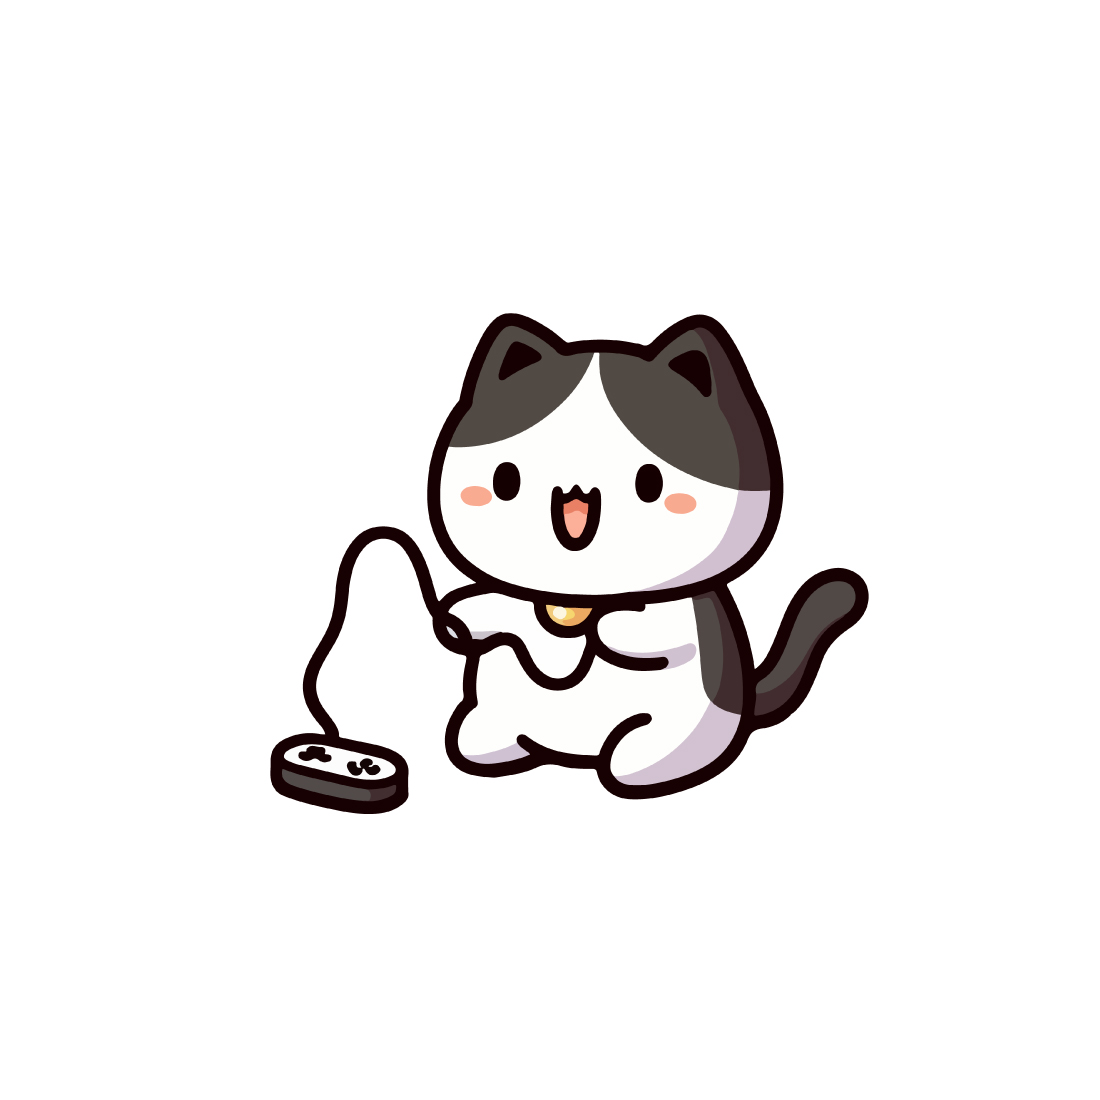 Cute kawaii cat character design vector illustration preview image.